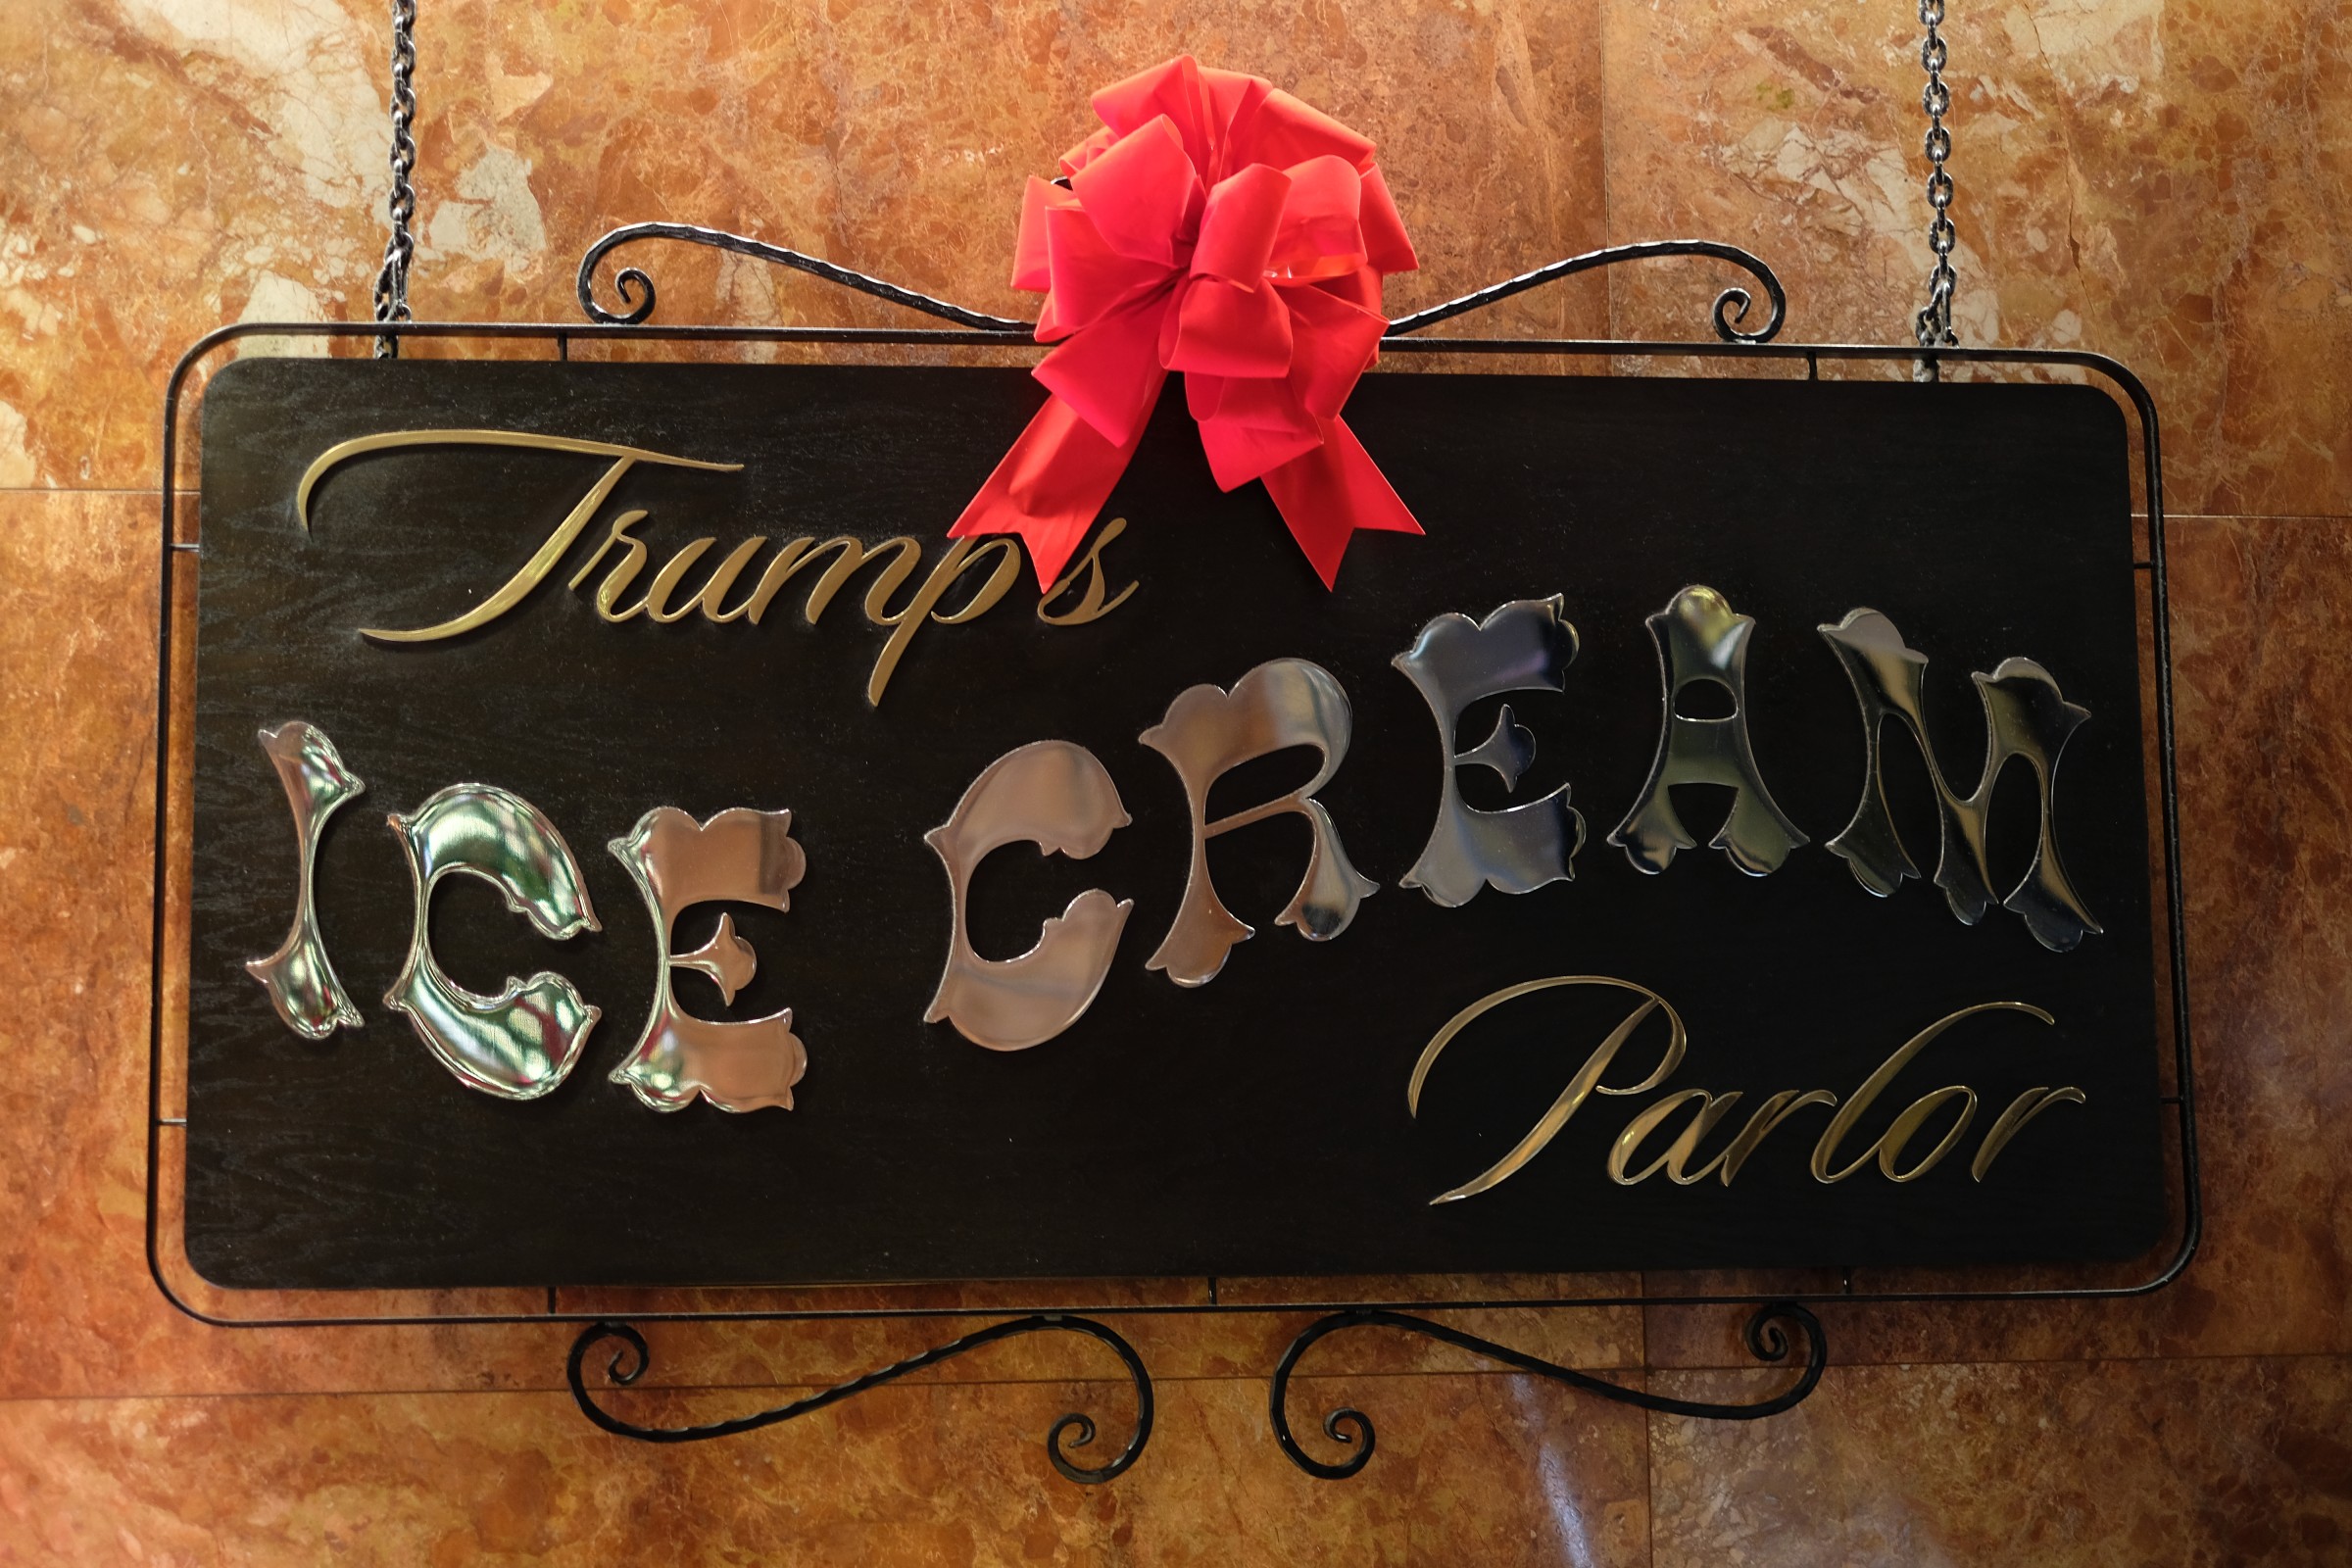 ice cream sign inside Trump Tower